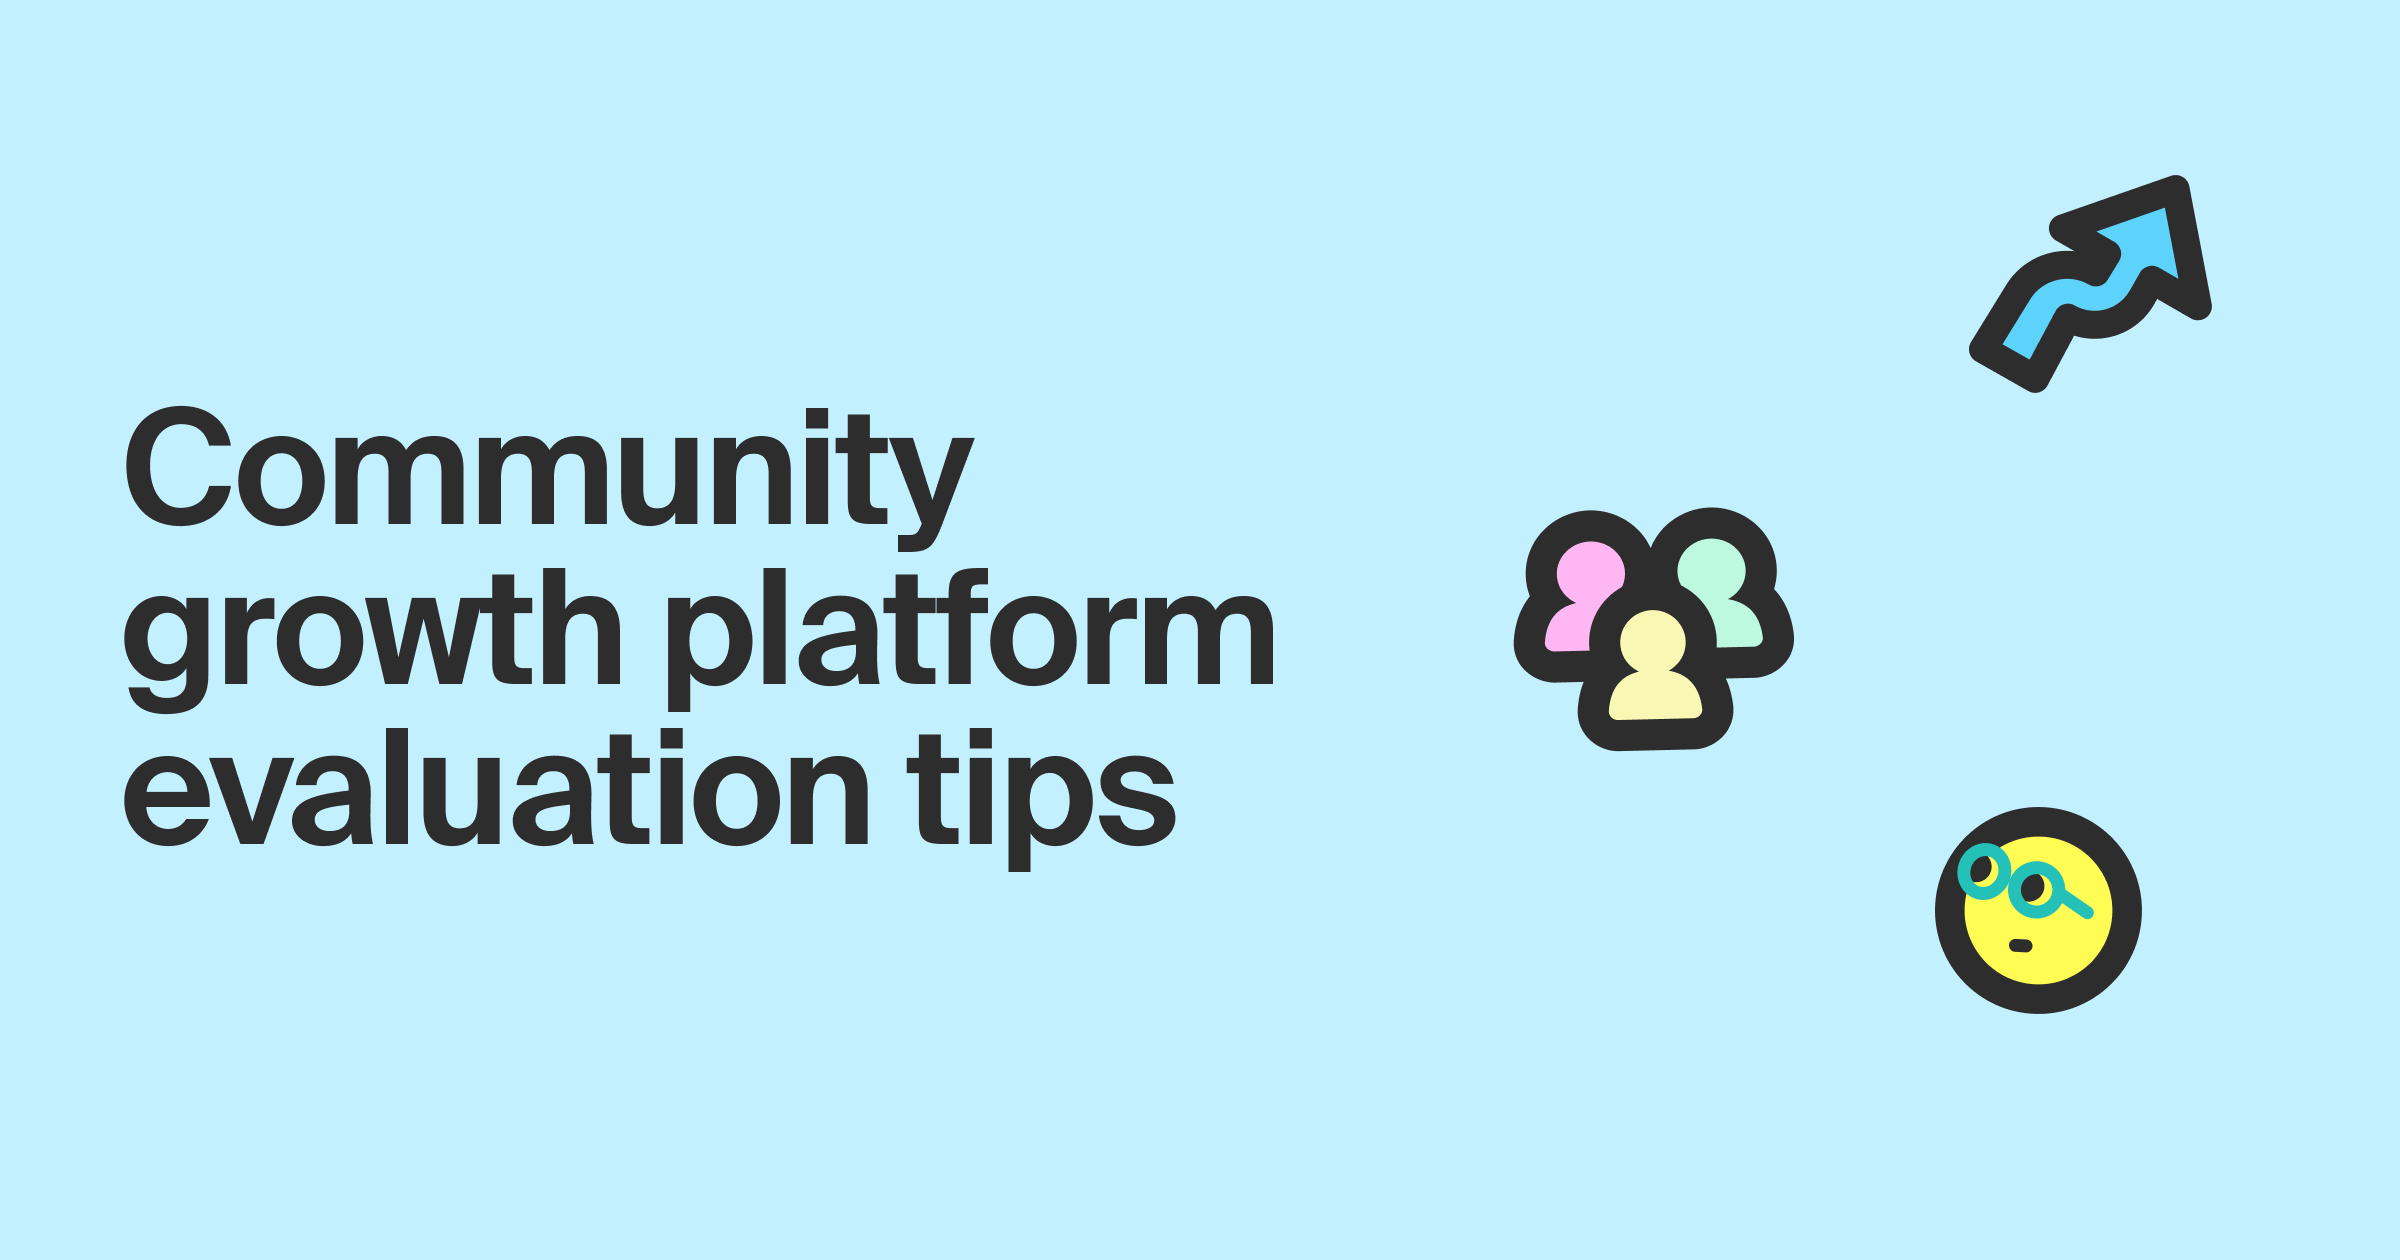 Community growth platform evaluation tips